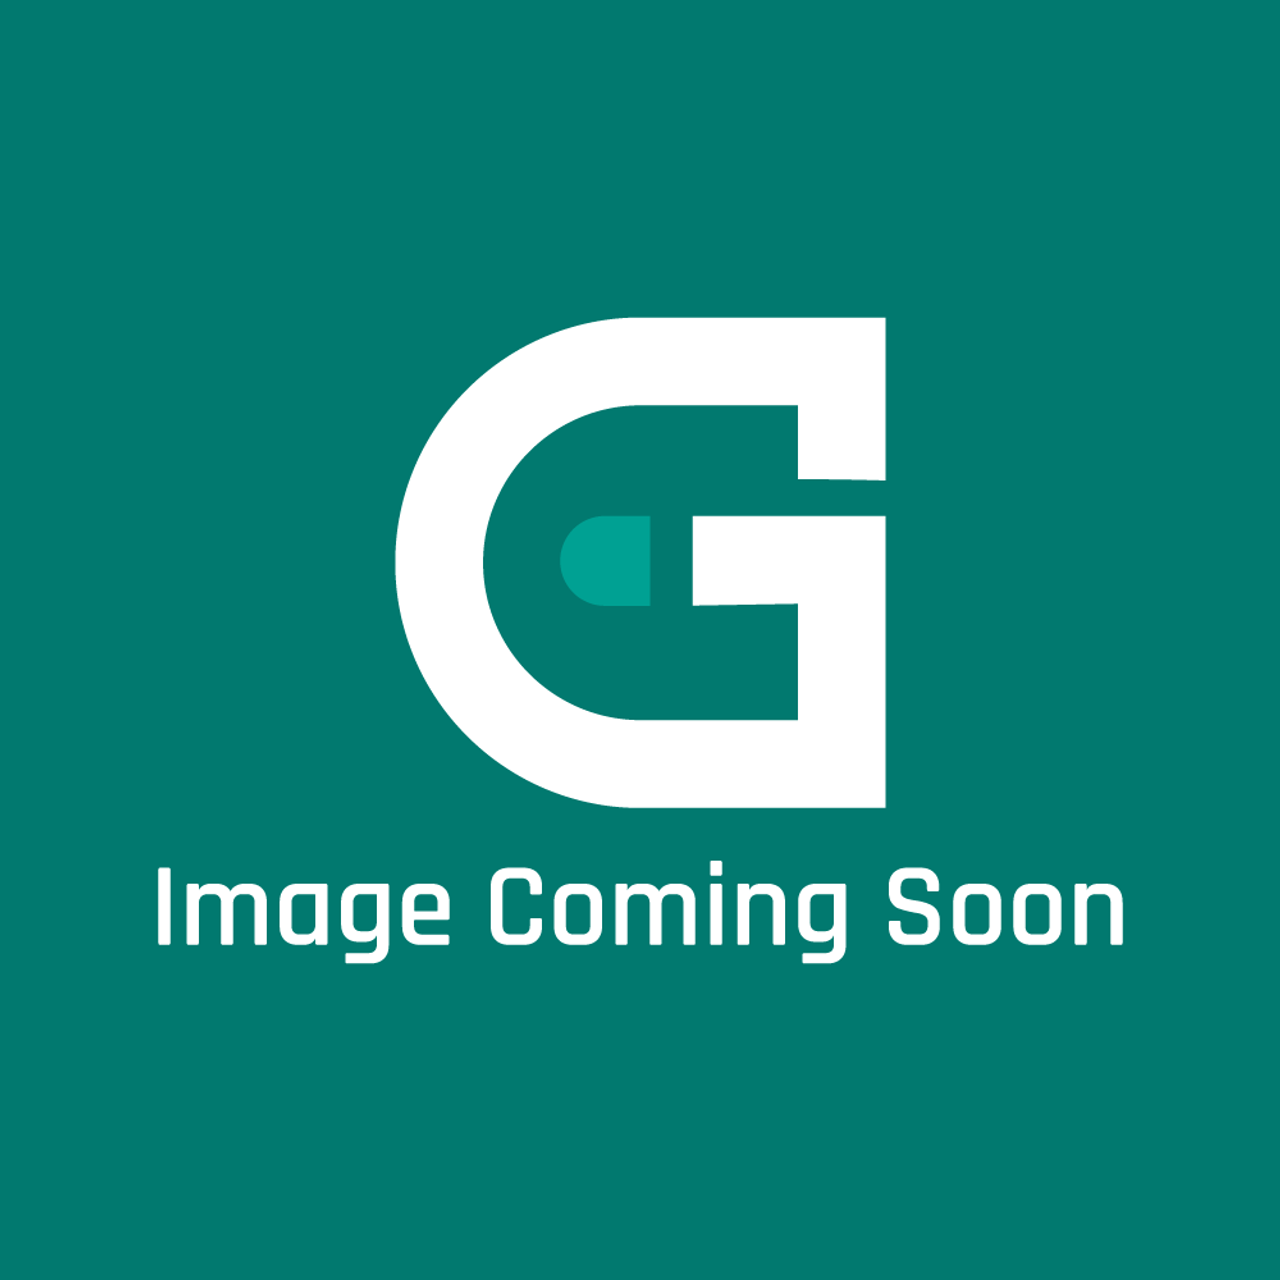 GE Appliances WJ43X24797 - Accordian Panel Seal - Image Coming Soon!